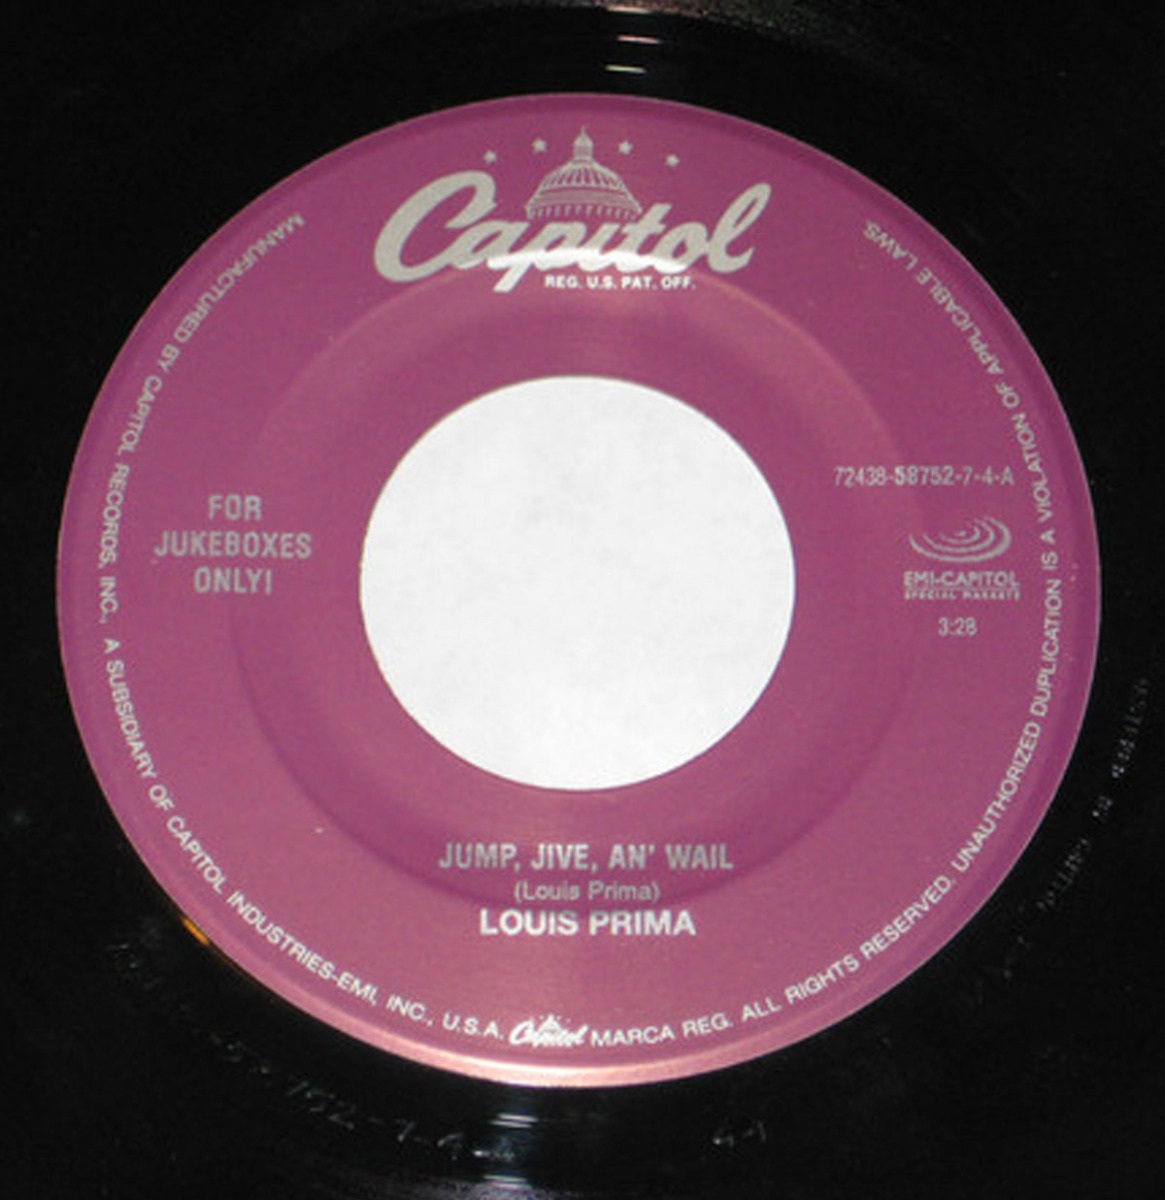 Single: Louis Prima - Jump, Jive An' Wail - Just A Gigolo-I Ain't Got Nobody (Medley)